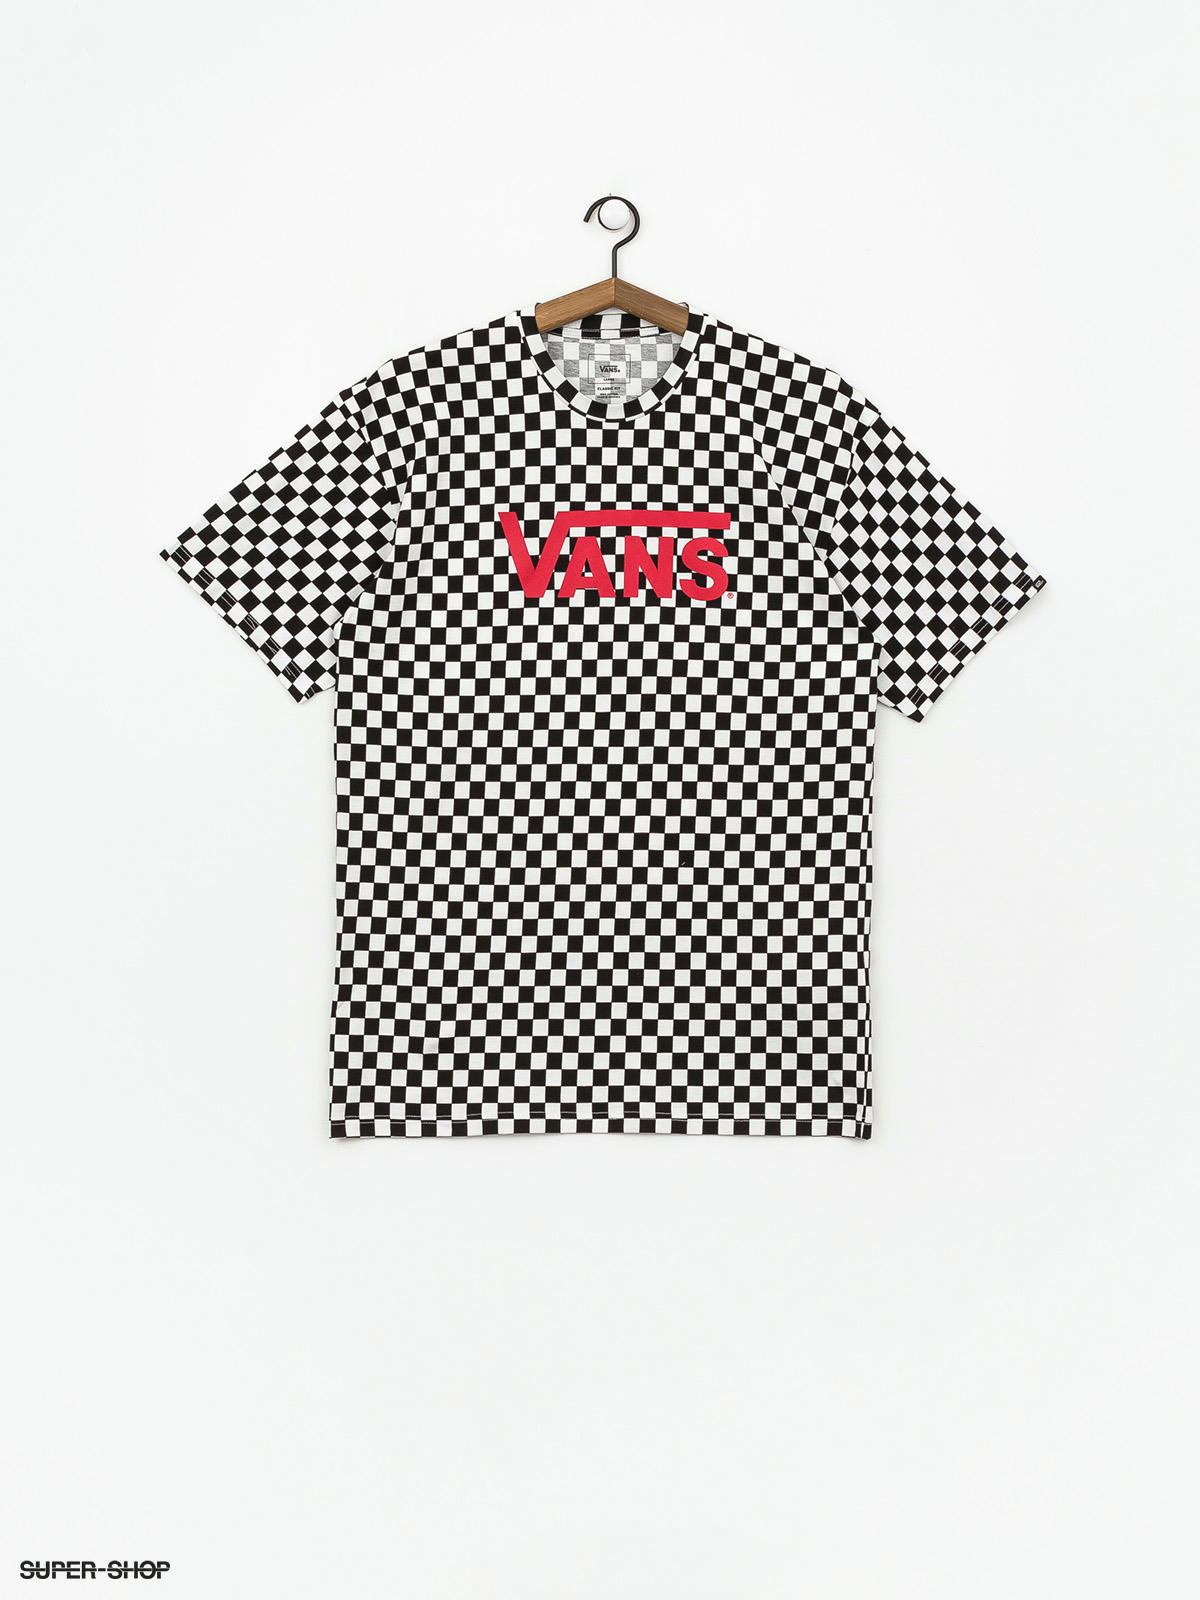 vans black and white checkered t shirt